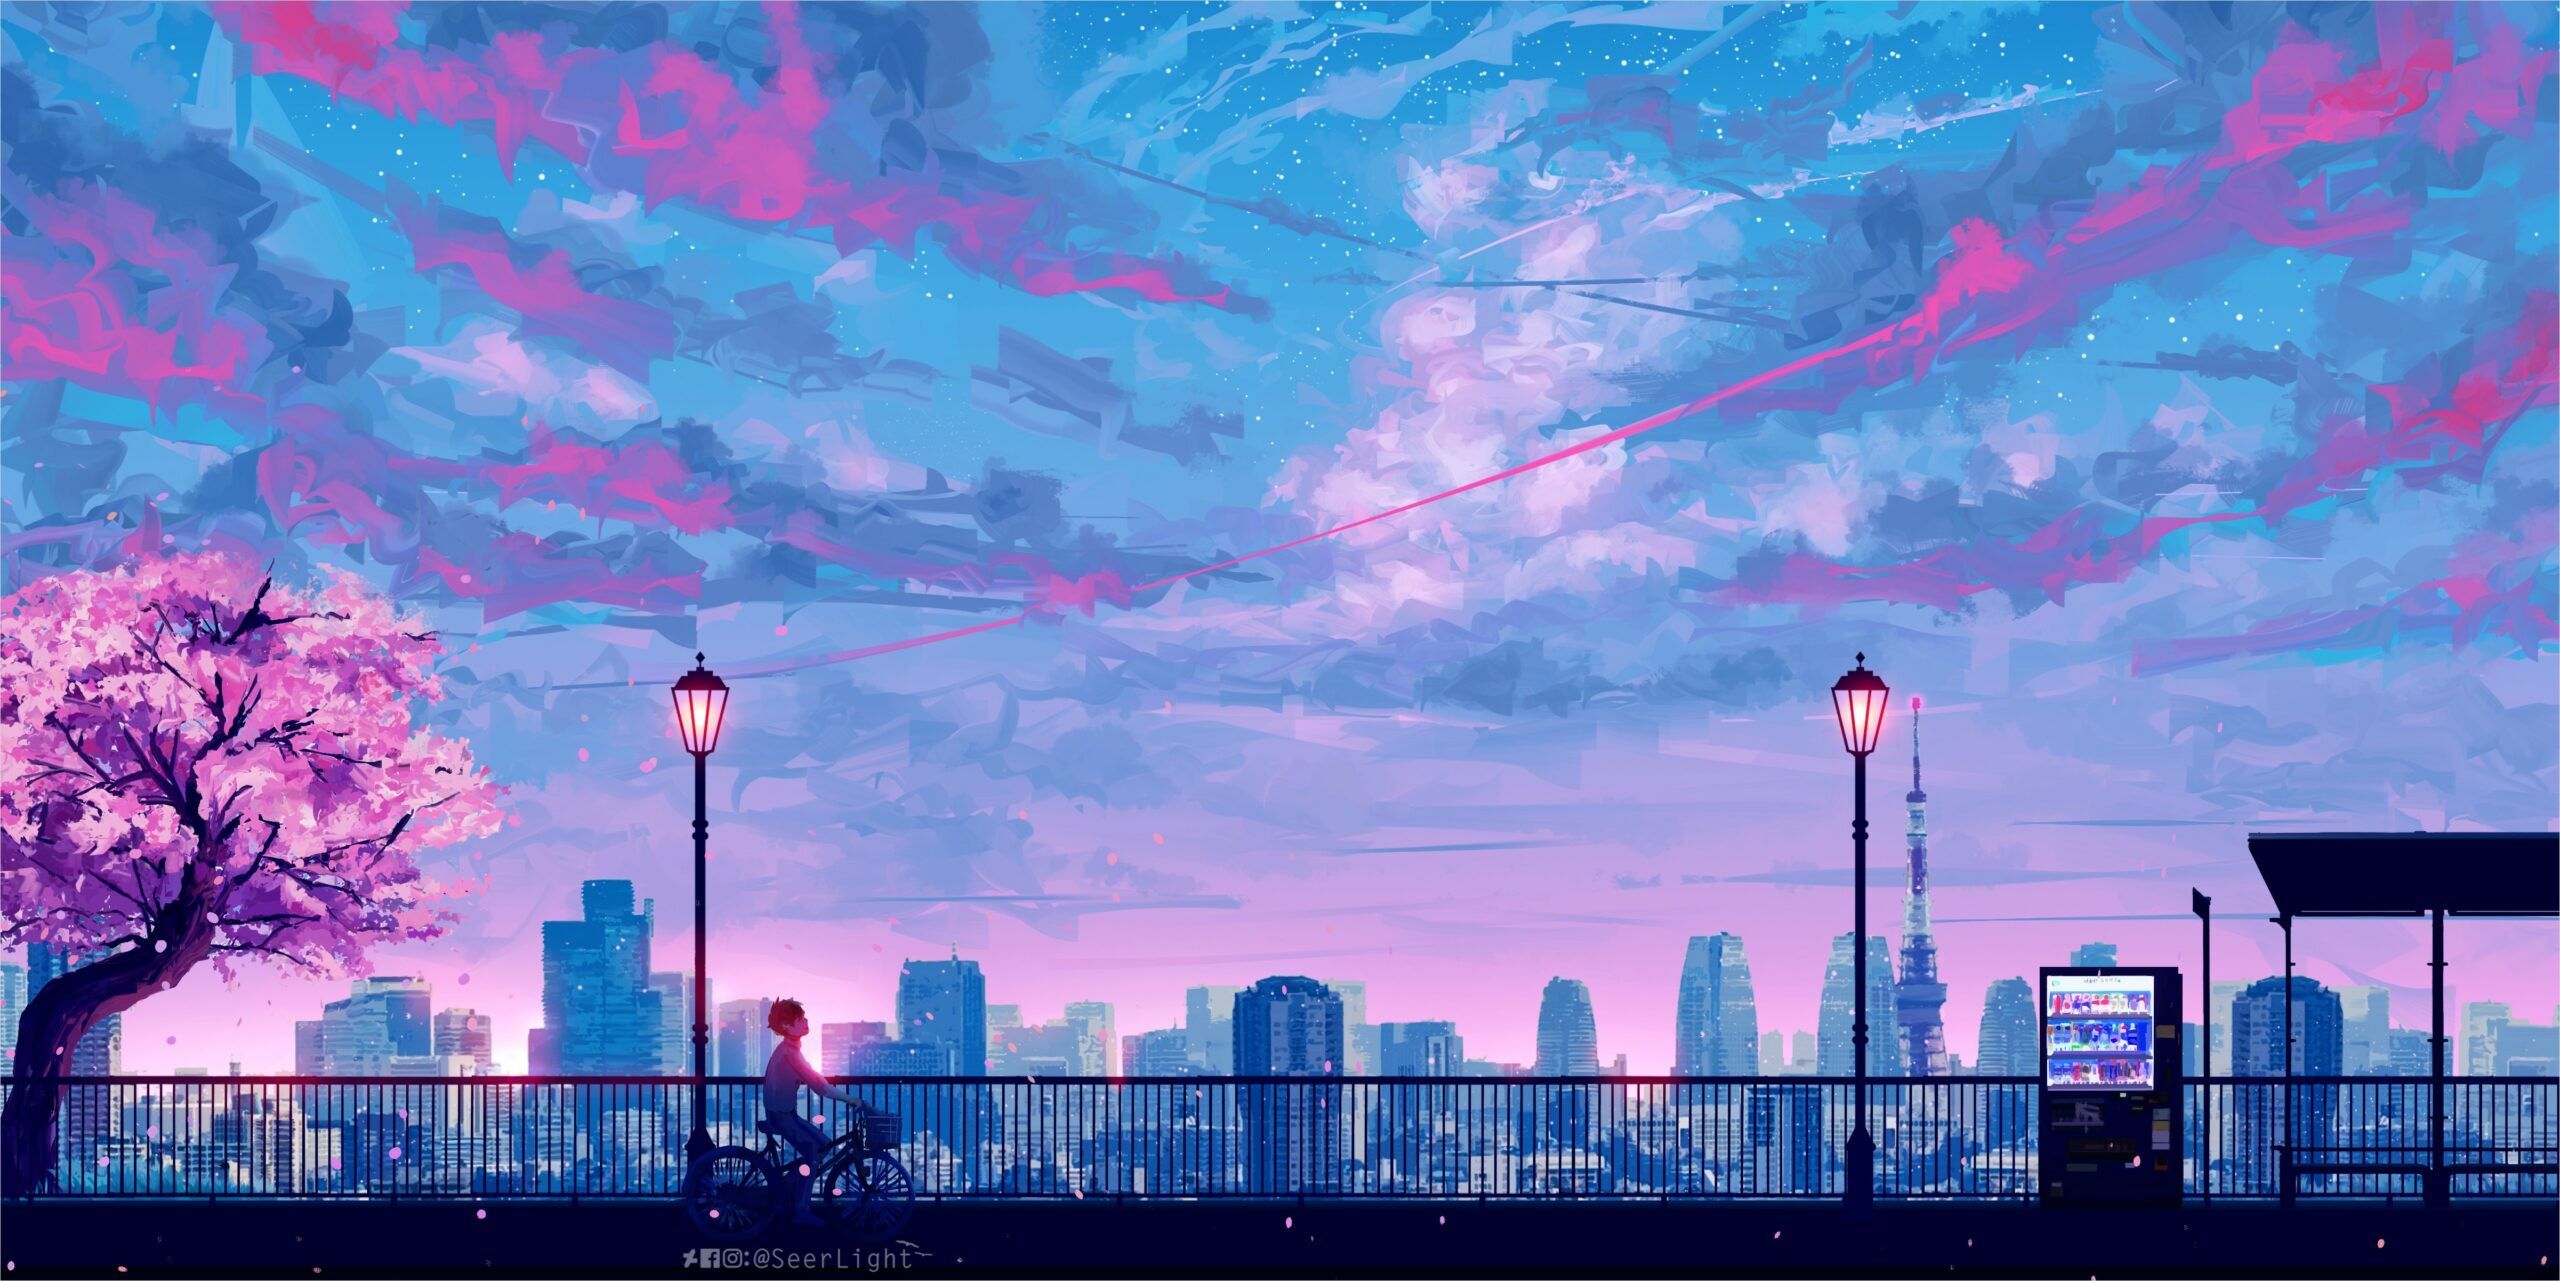 4k Anime Landscape Wallpaper. Cityscape wallpaper, Scenery wallpaper, Landscape wallpaper